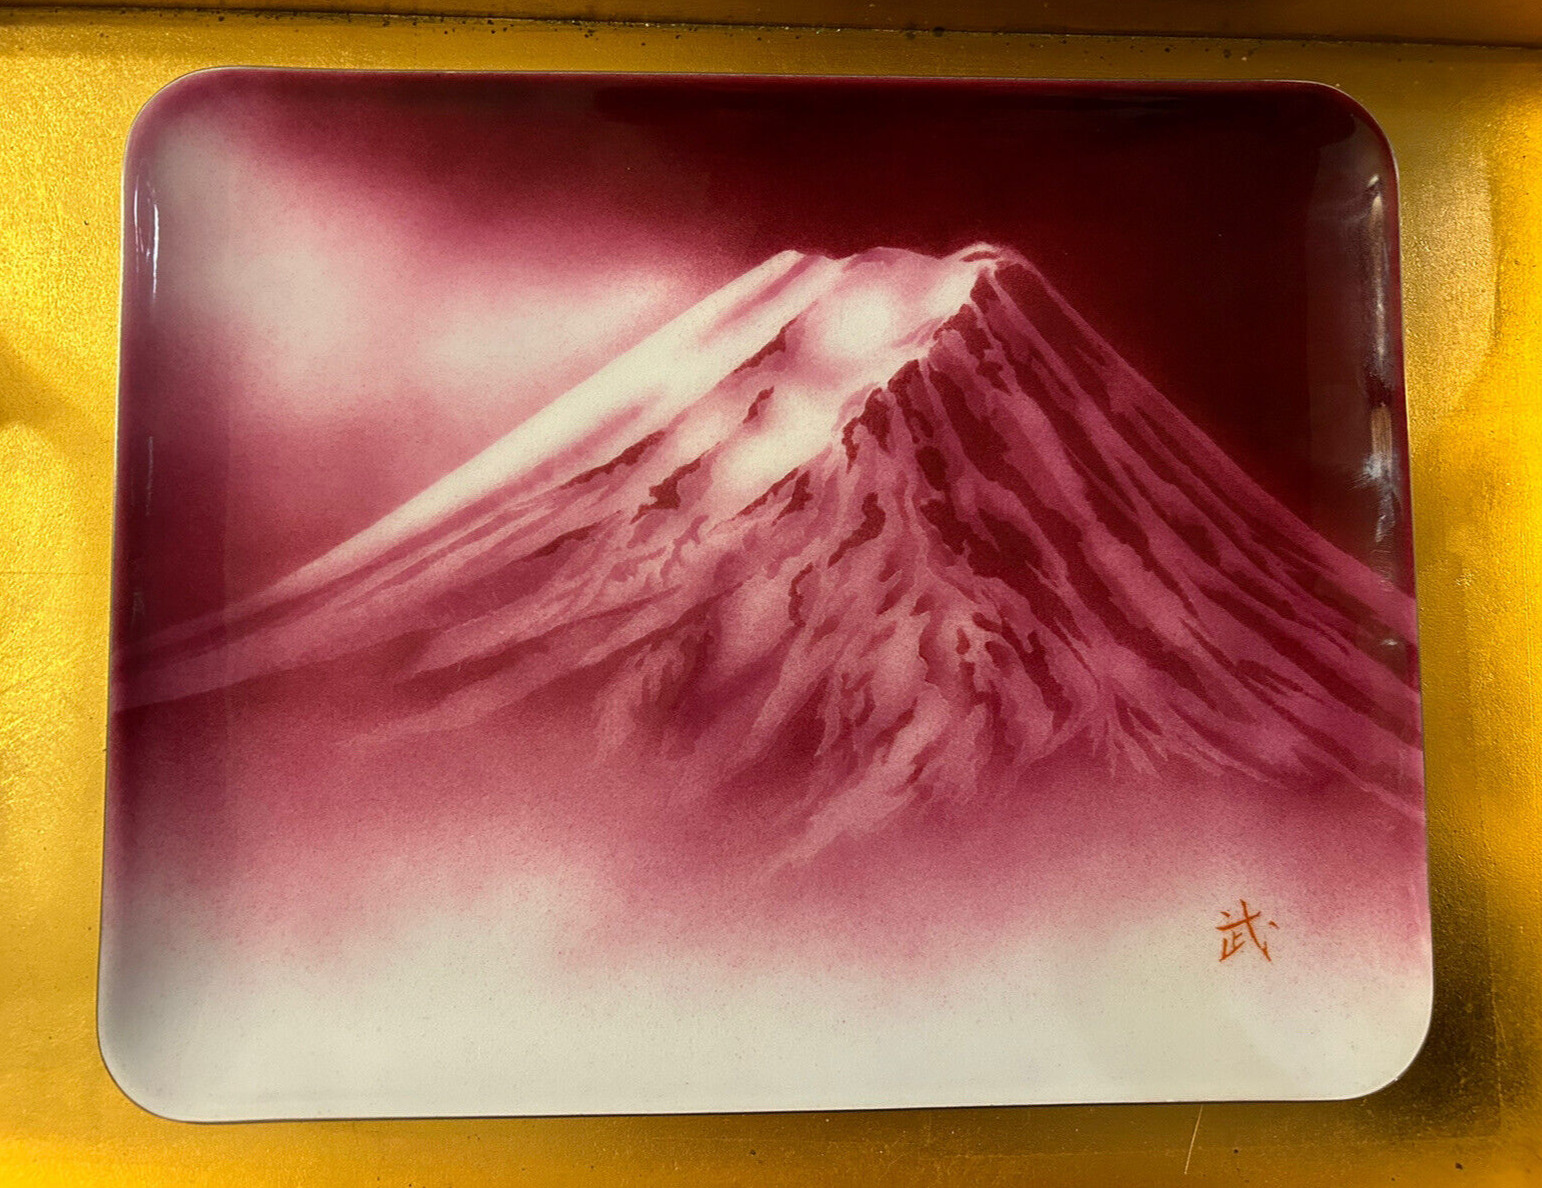 Saikosha Mt Fuji Enamel Cloisonné Ware Tray, Signed Japanese Ornamental Art Tray